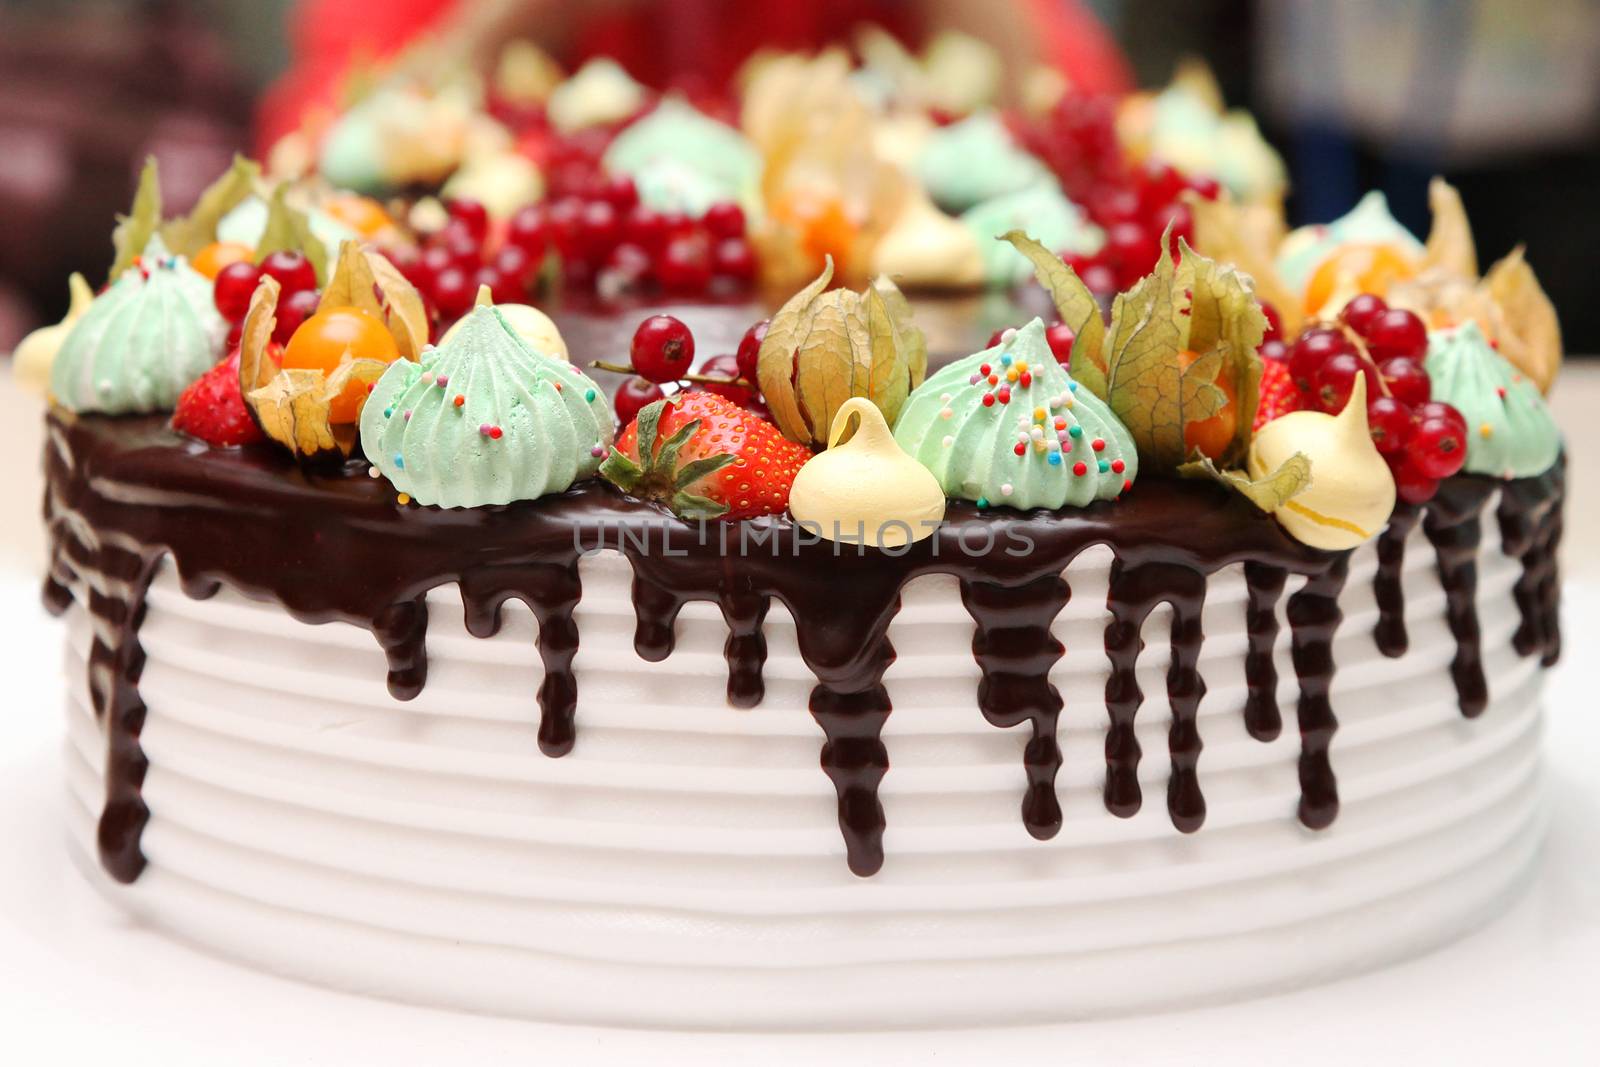 Delicious and beautiful cake by olga_zinovskaya